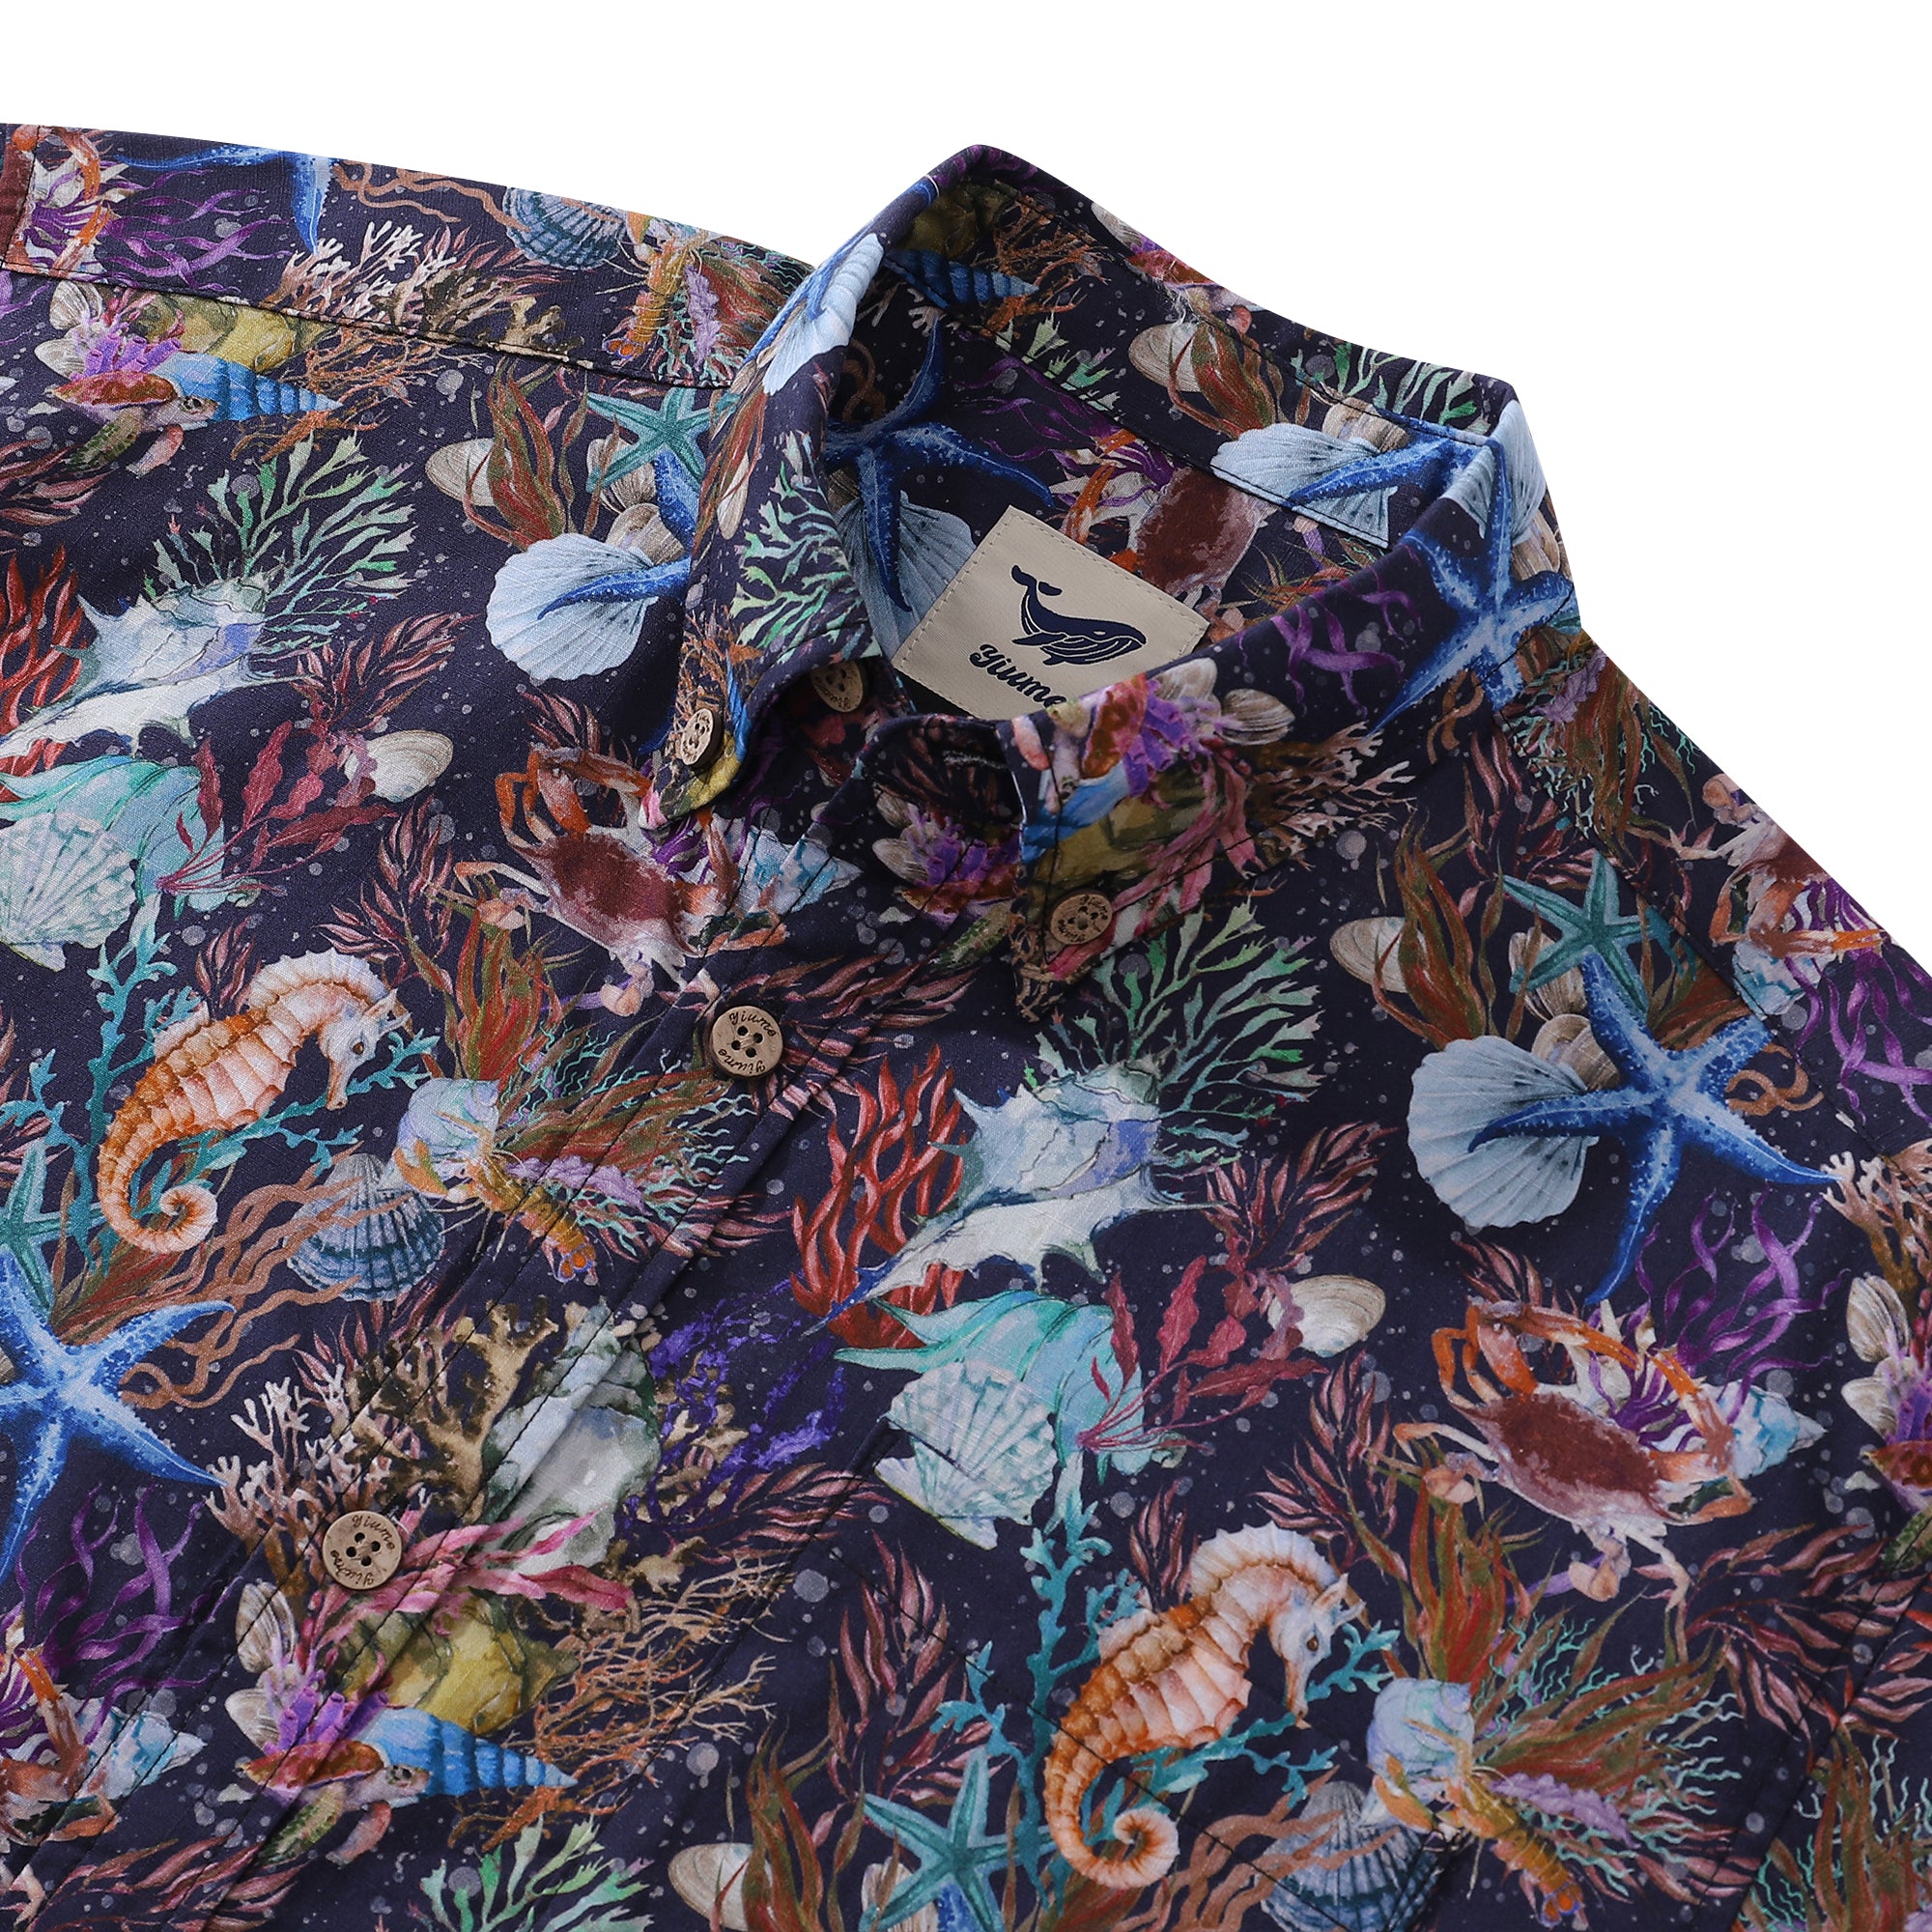 Men's Funny Hawaiian Shirt Ocean Print Cotton Button-down Short Sleeve Aloha Shirt